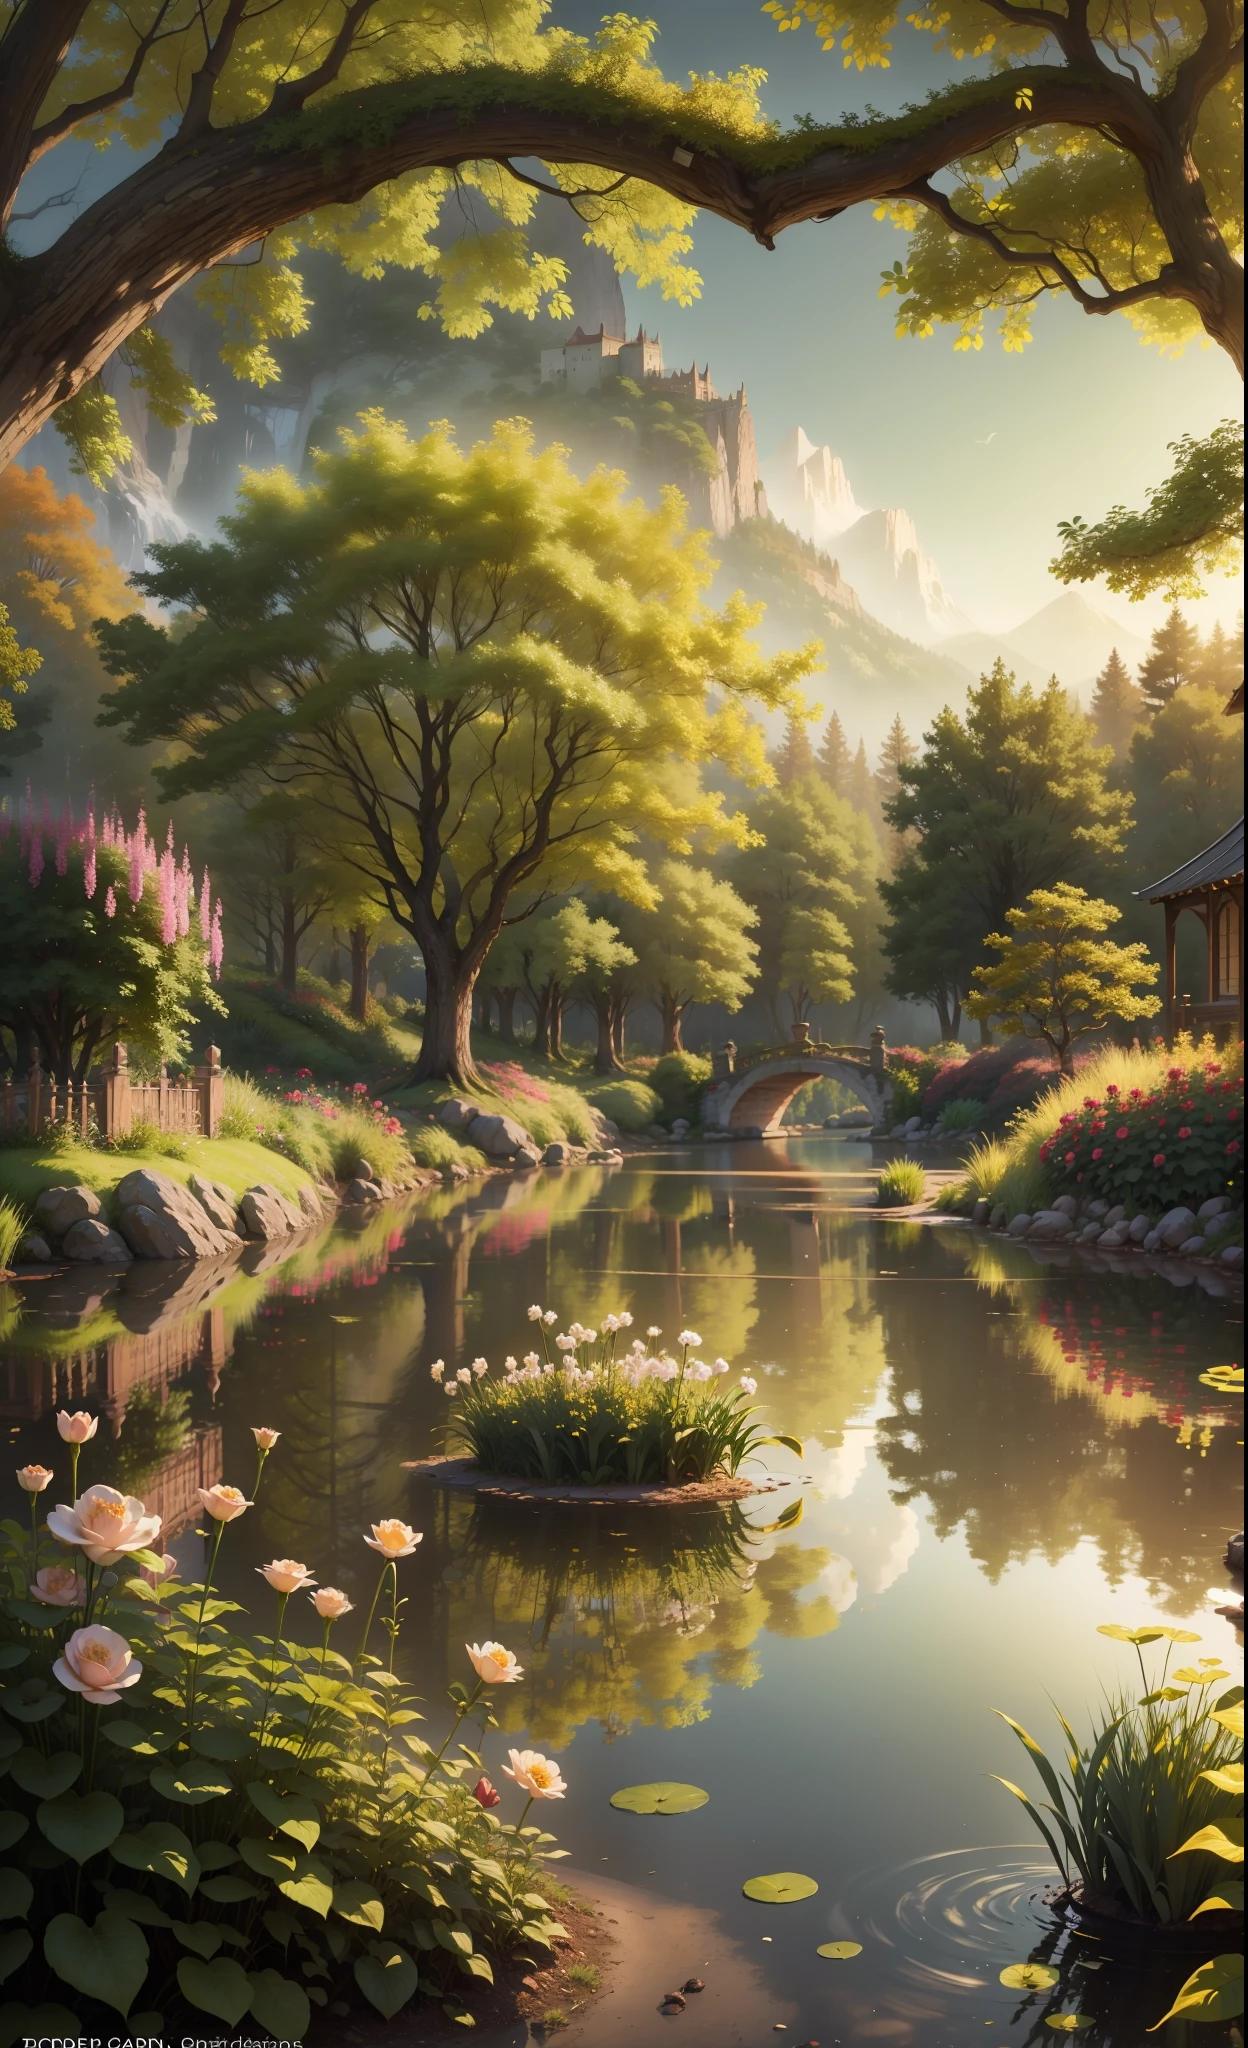 Eden's garden in heaven, beautiful landscape, magestic, ethereal, golden, trees, lake, bushes, flowers